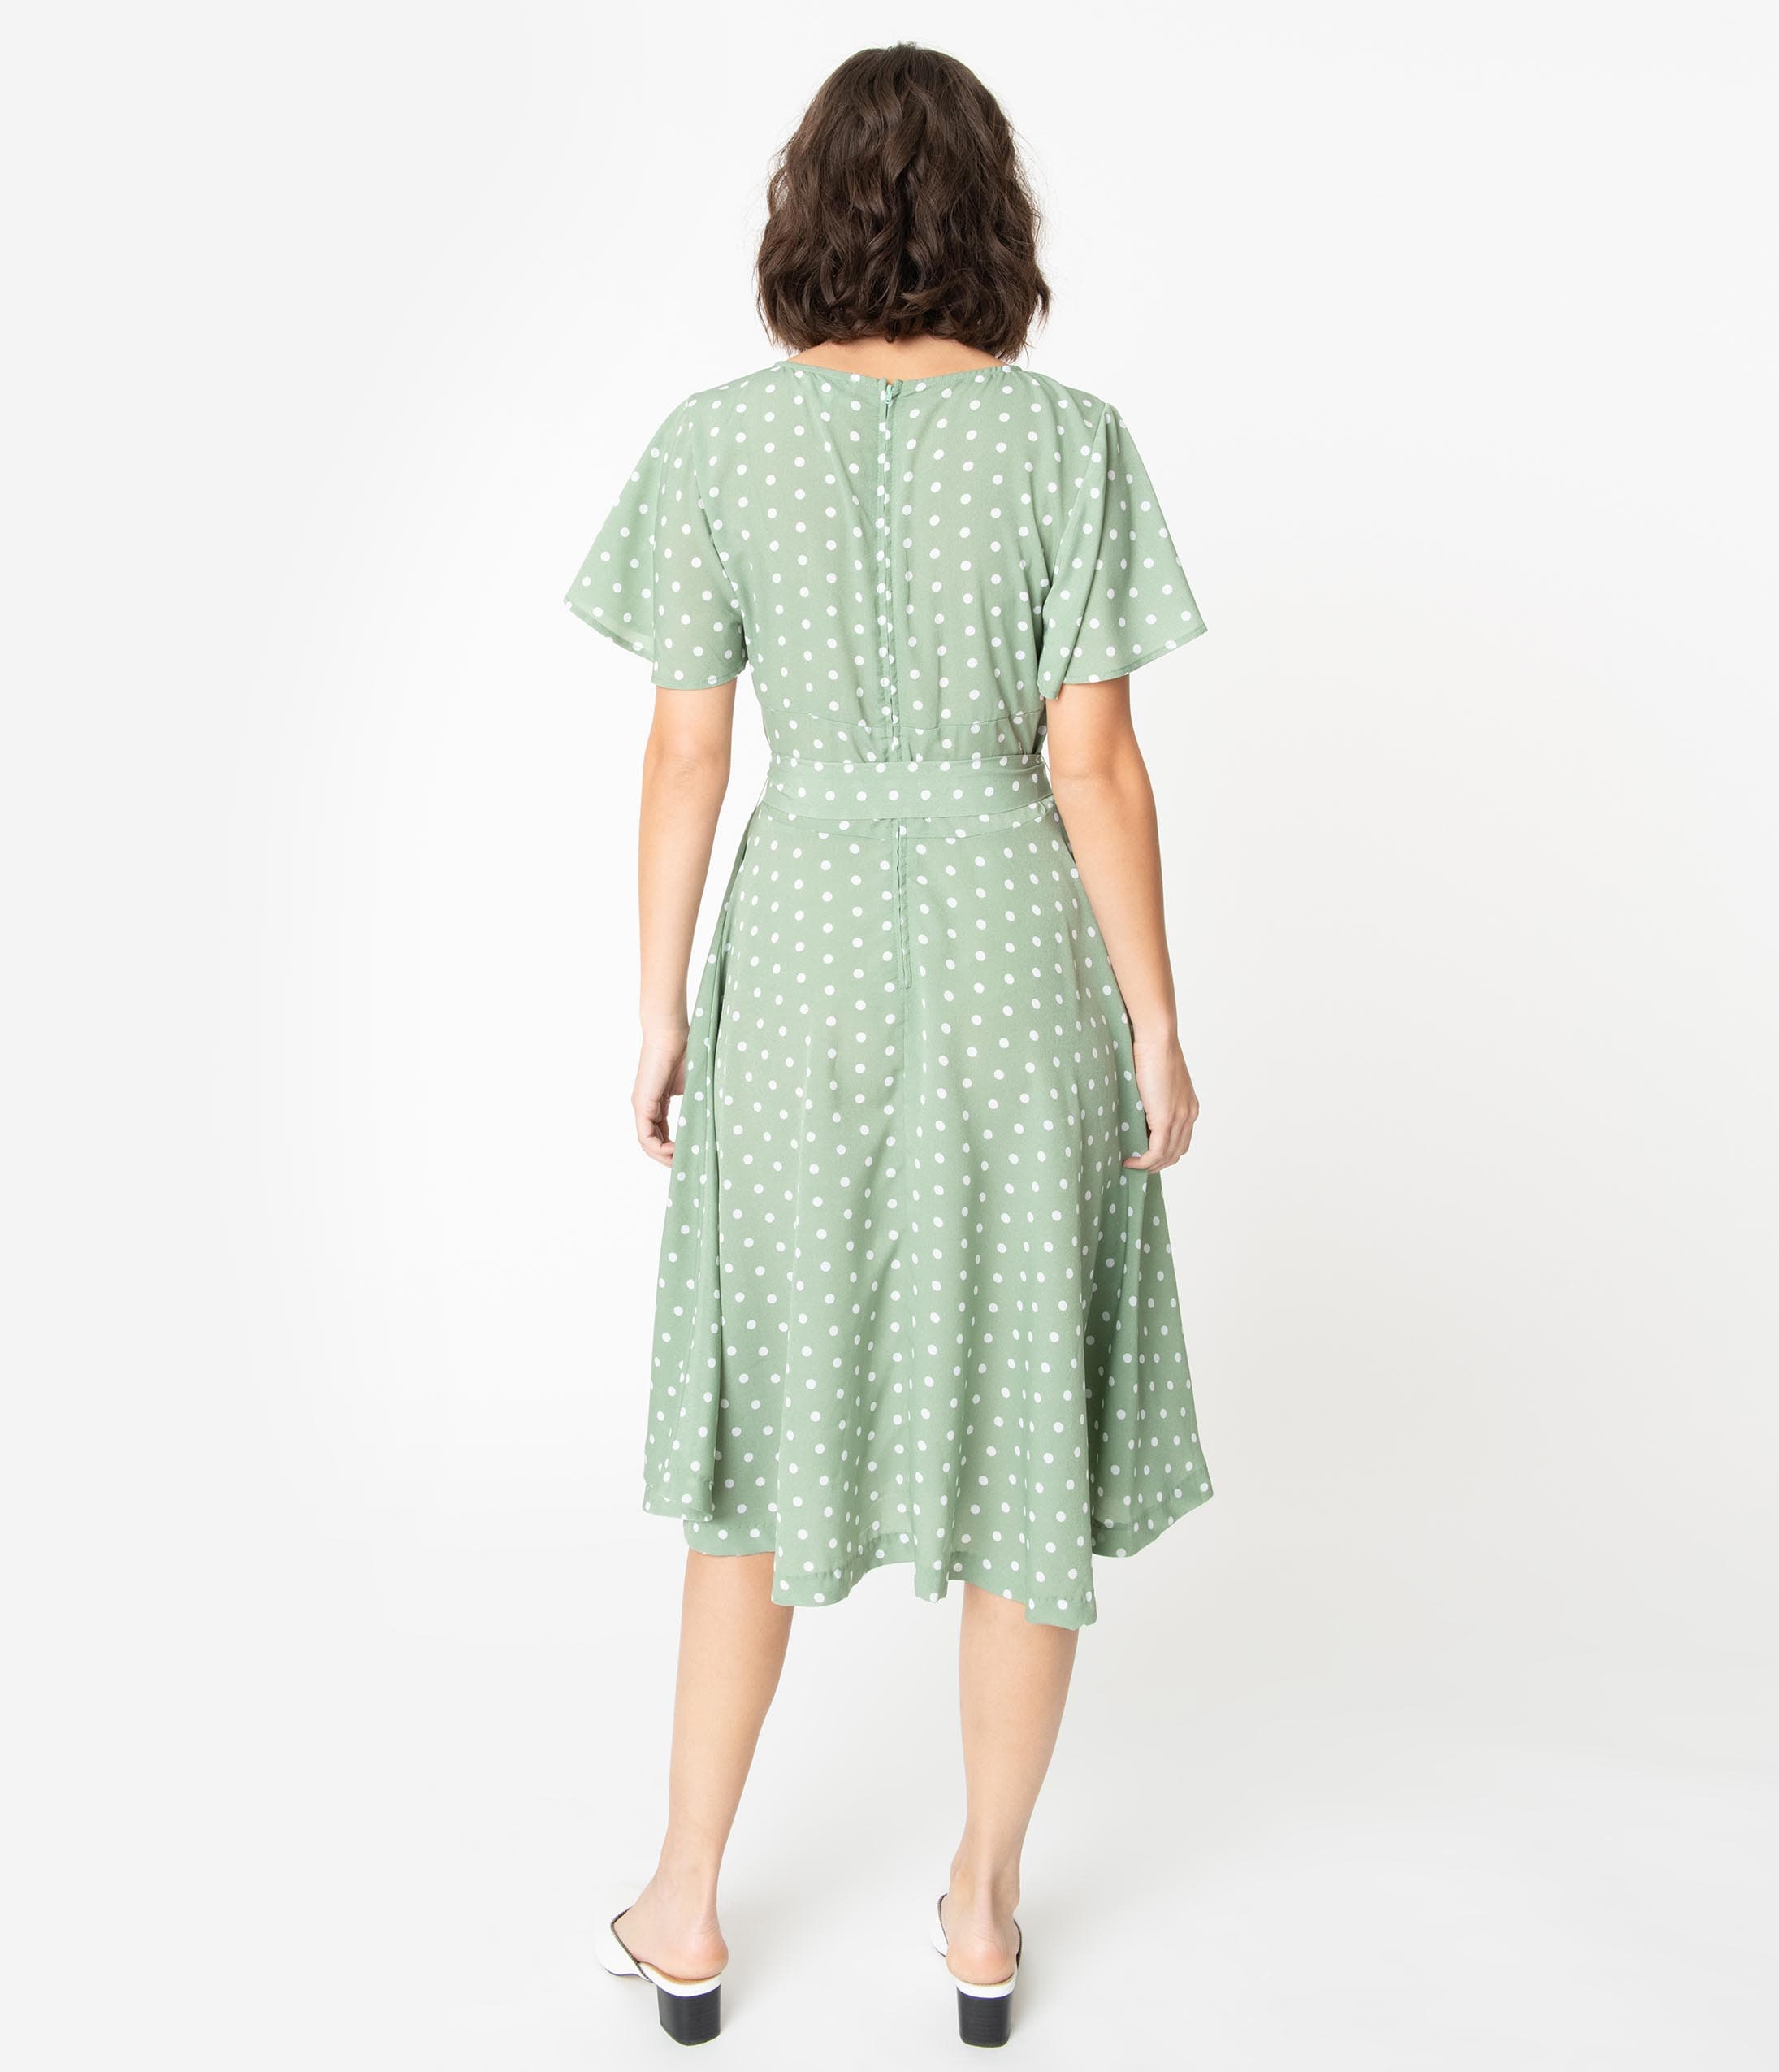 1940 polka dot dress